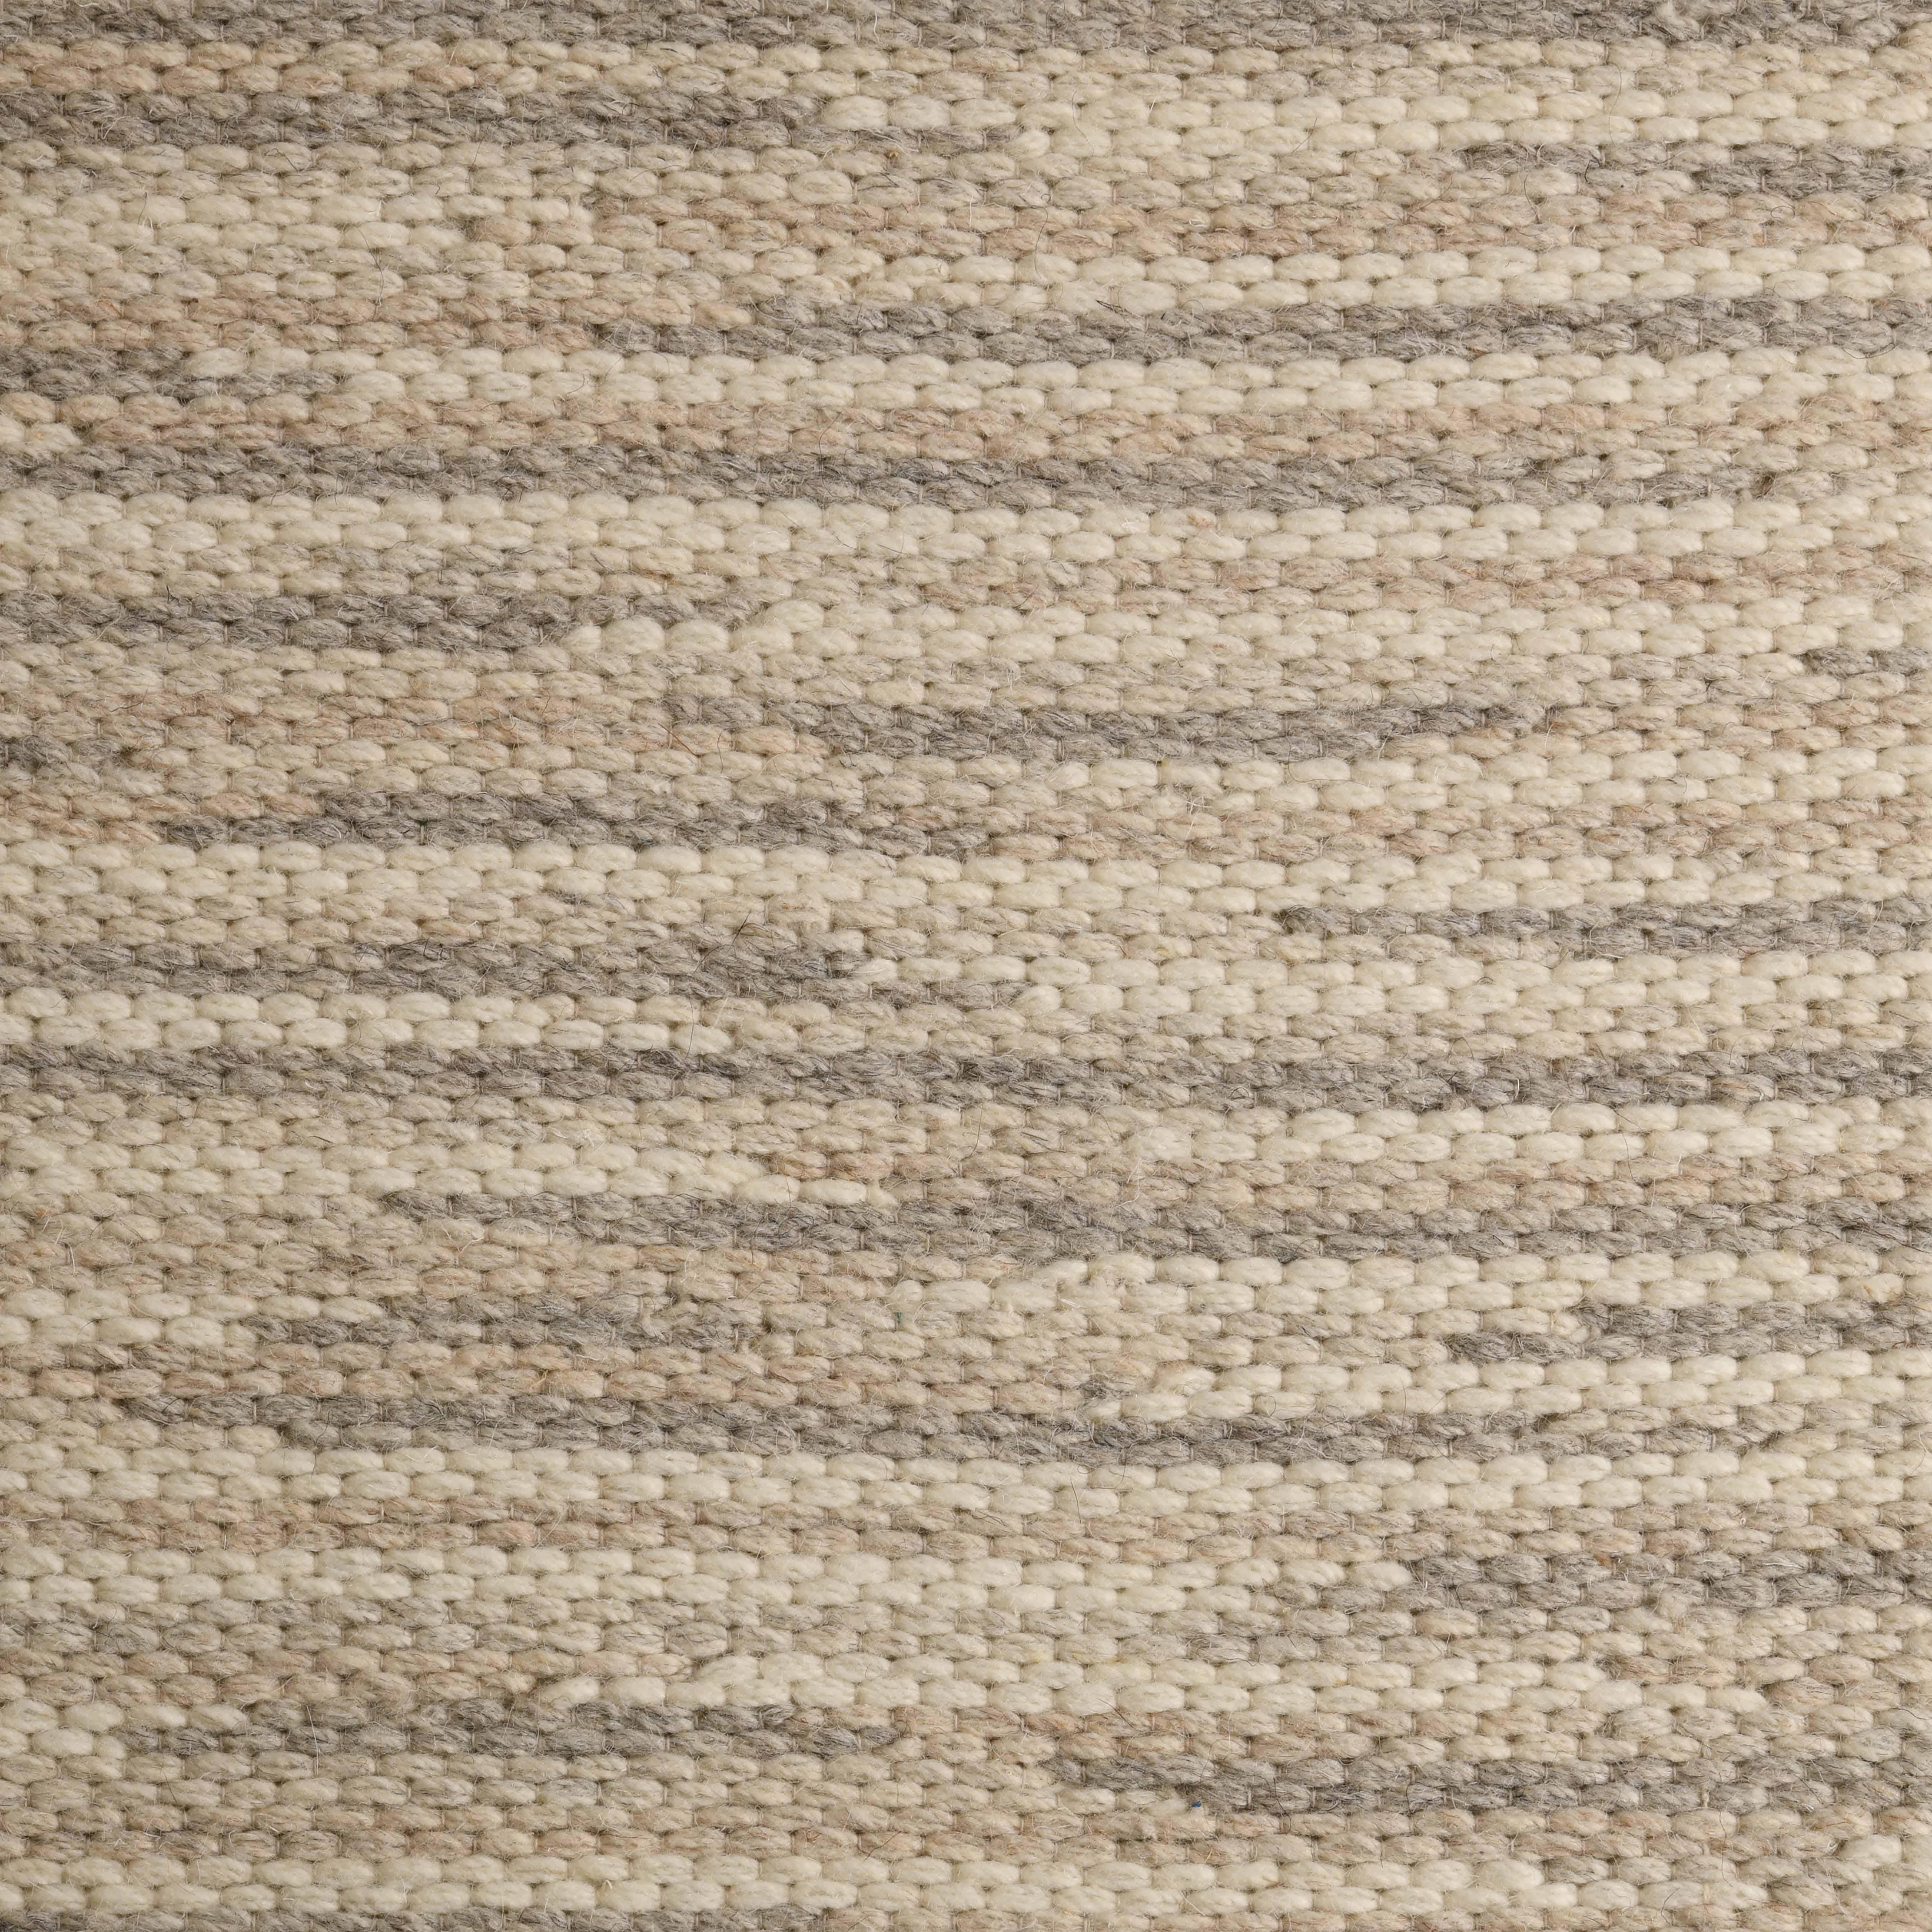 Rivus, Stone, Handwoven Face 60% Undyed NZ Wool, 40% Undyed MED Wool, 6' x 9'